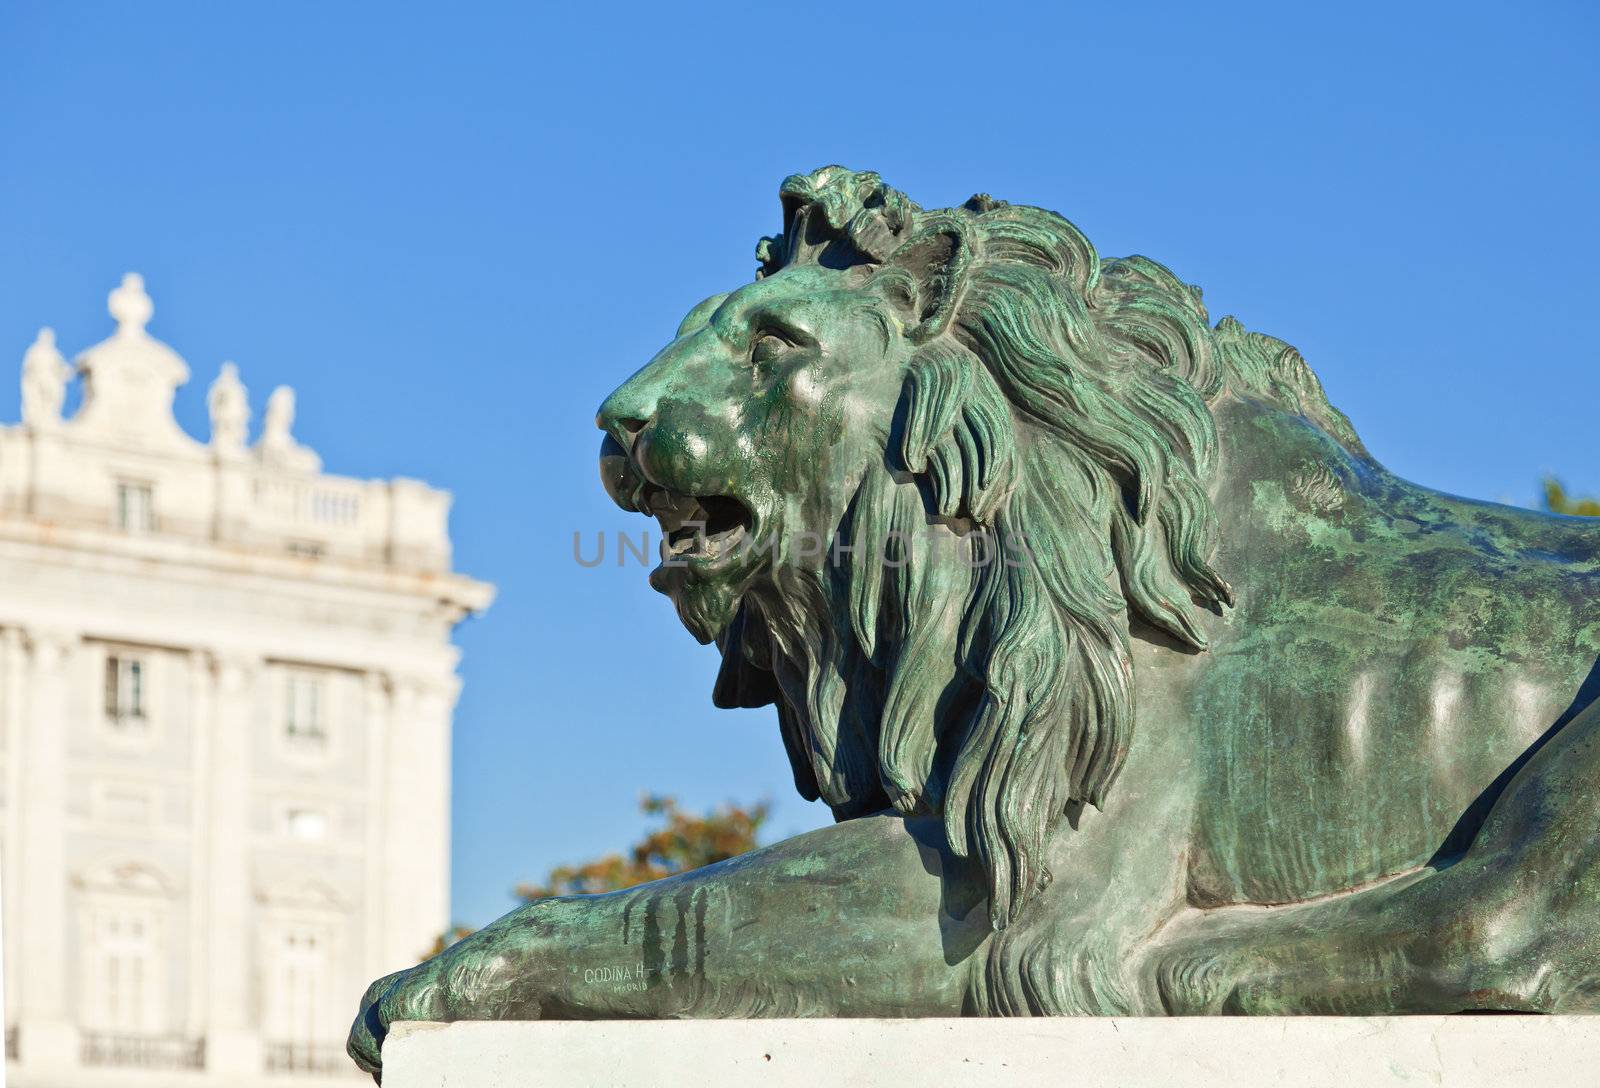 Madrid Plaza de Oriente, statue of lion. Madrid, Spain 